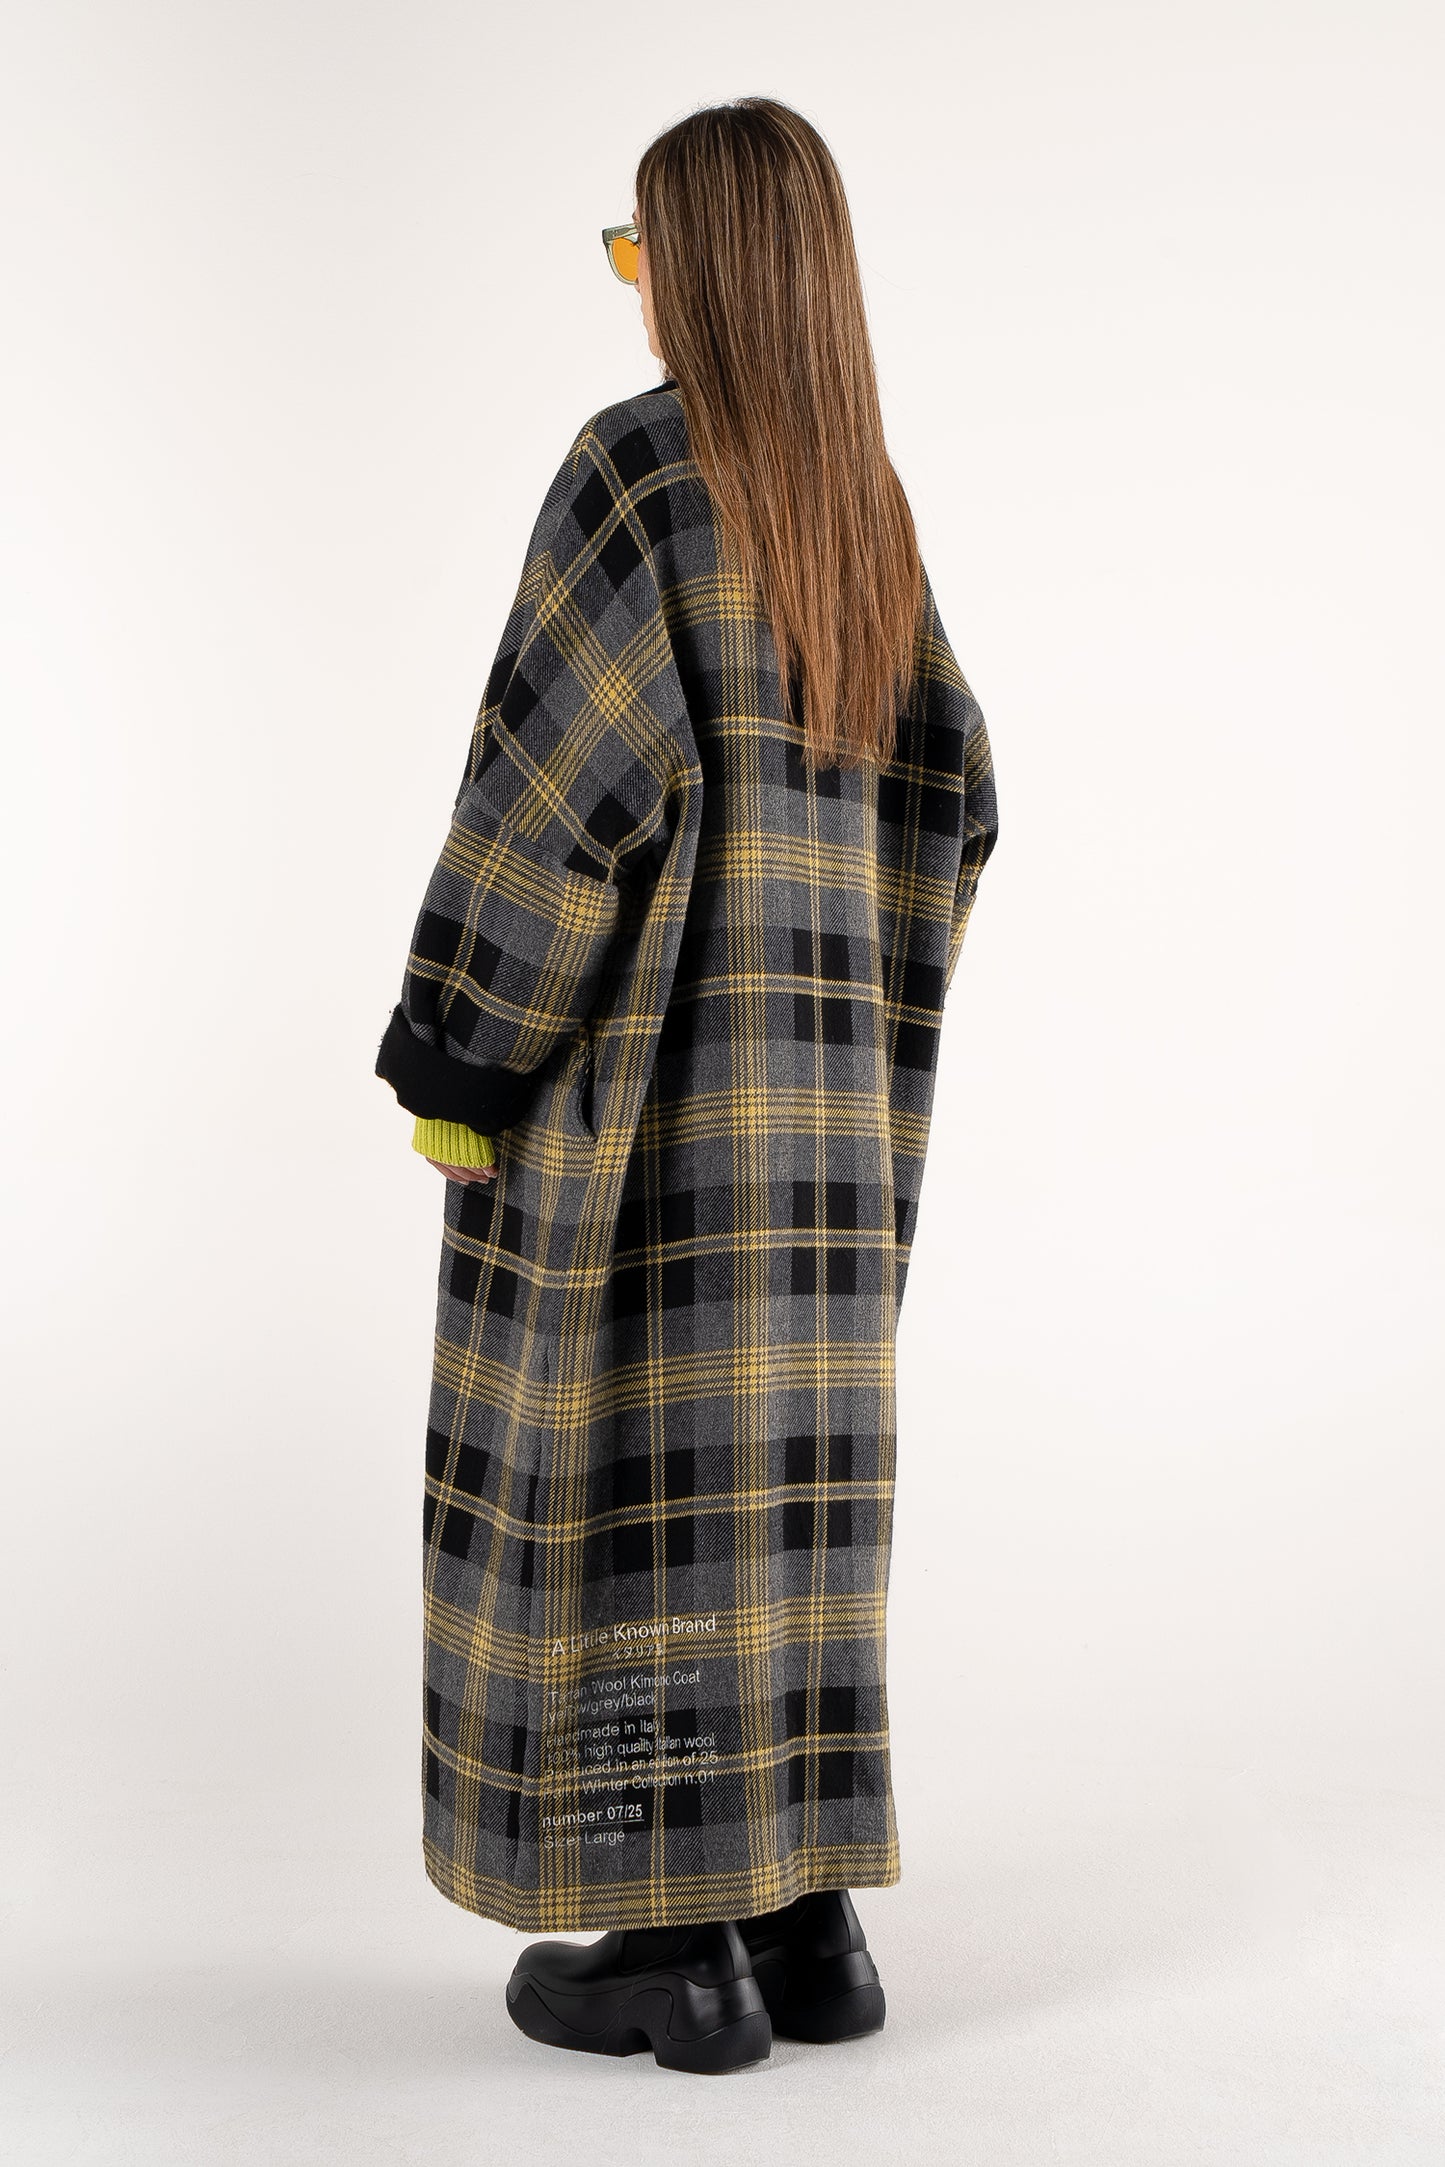 Wool Check Kimono – Grey/Yellow/Black